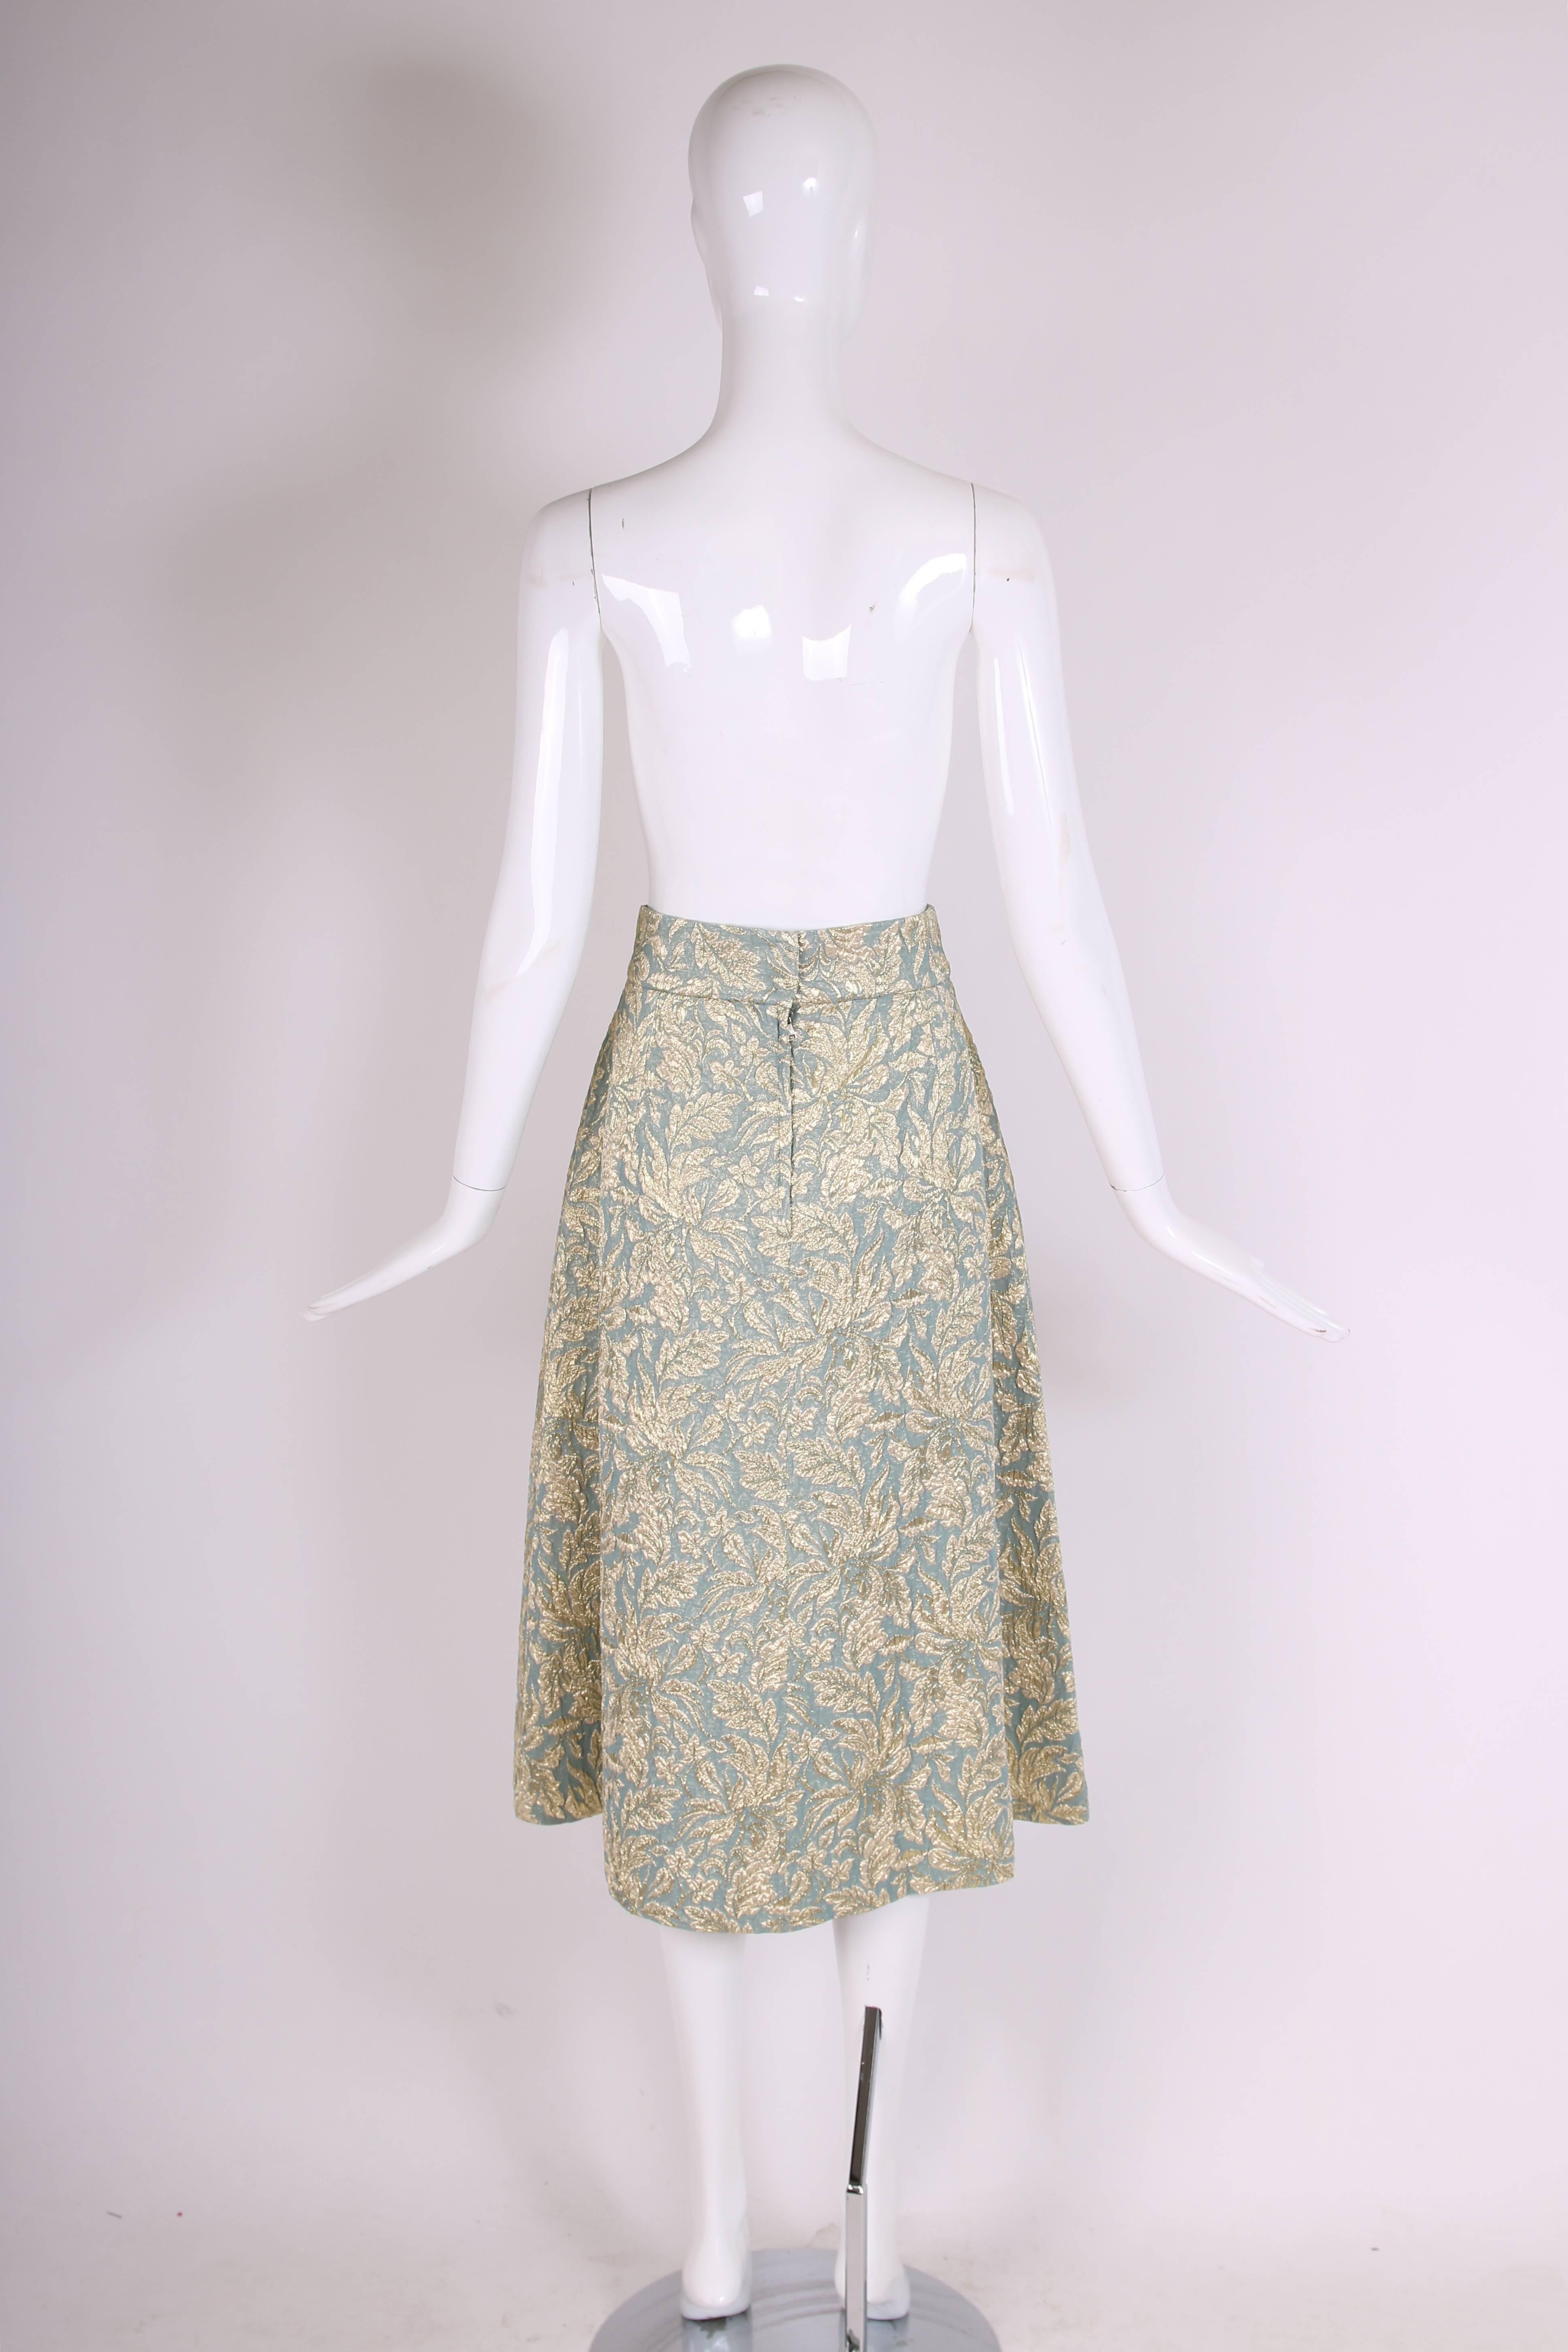 Women's Dolce & Gabbana Gold & Blue Metallic Skirt w/Foliate Pattern